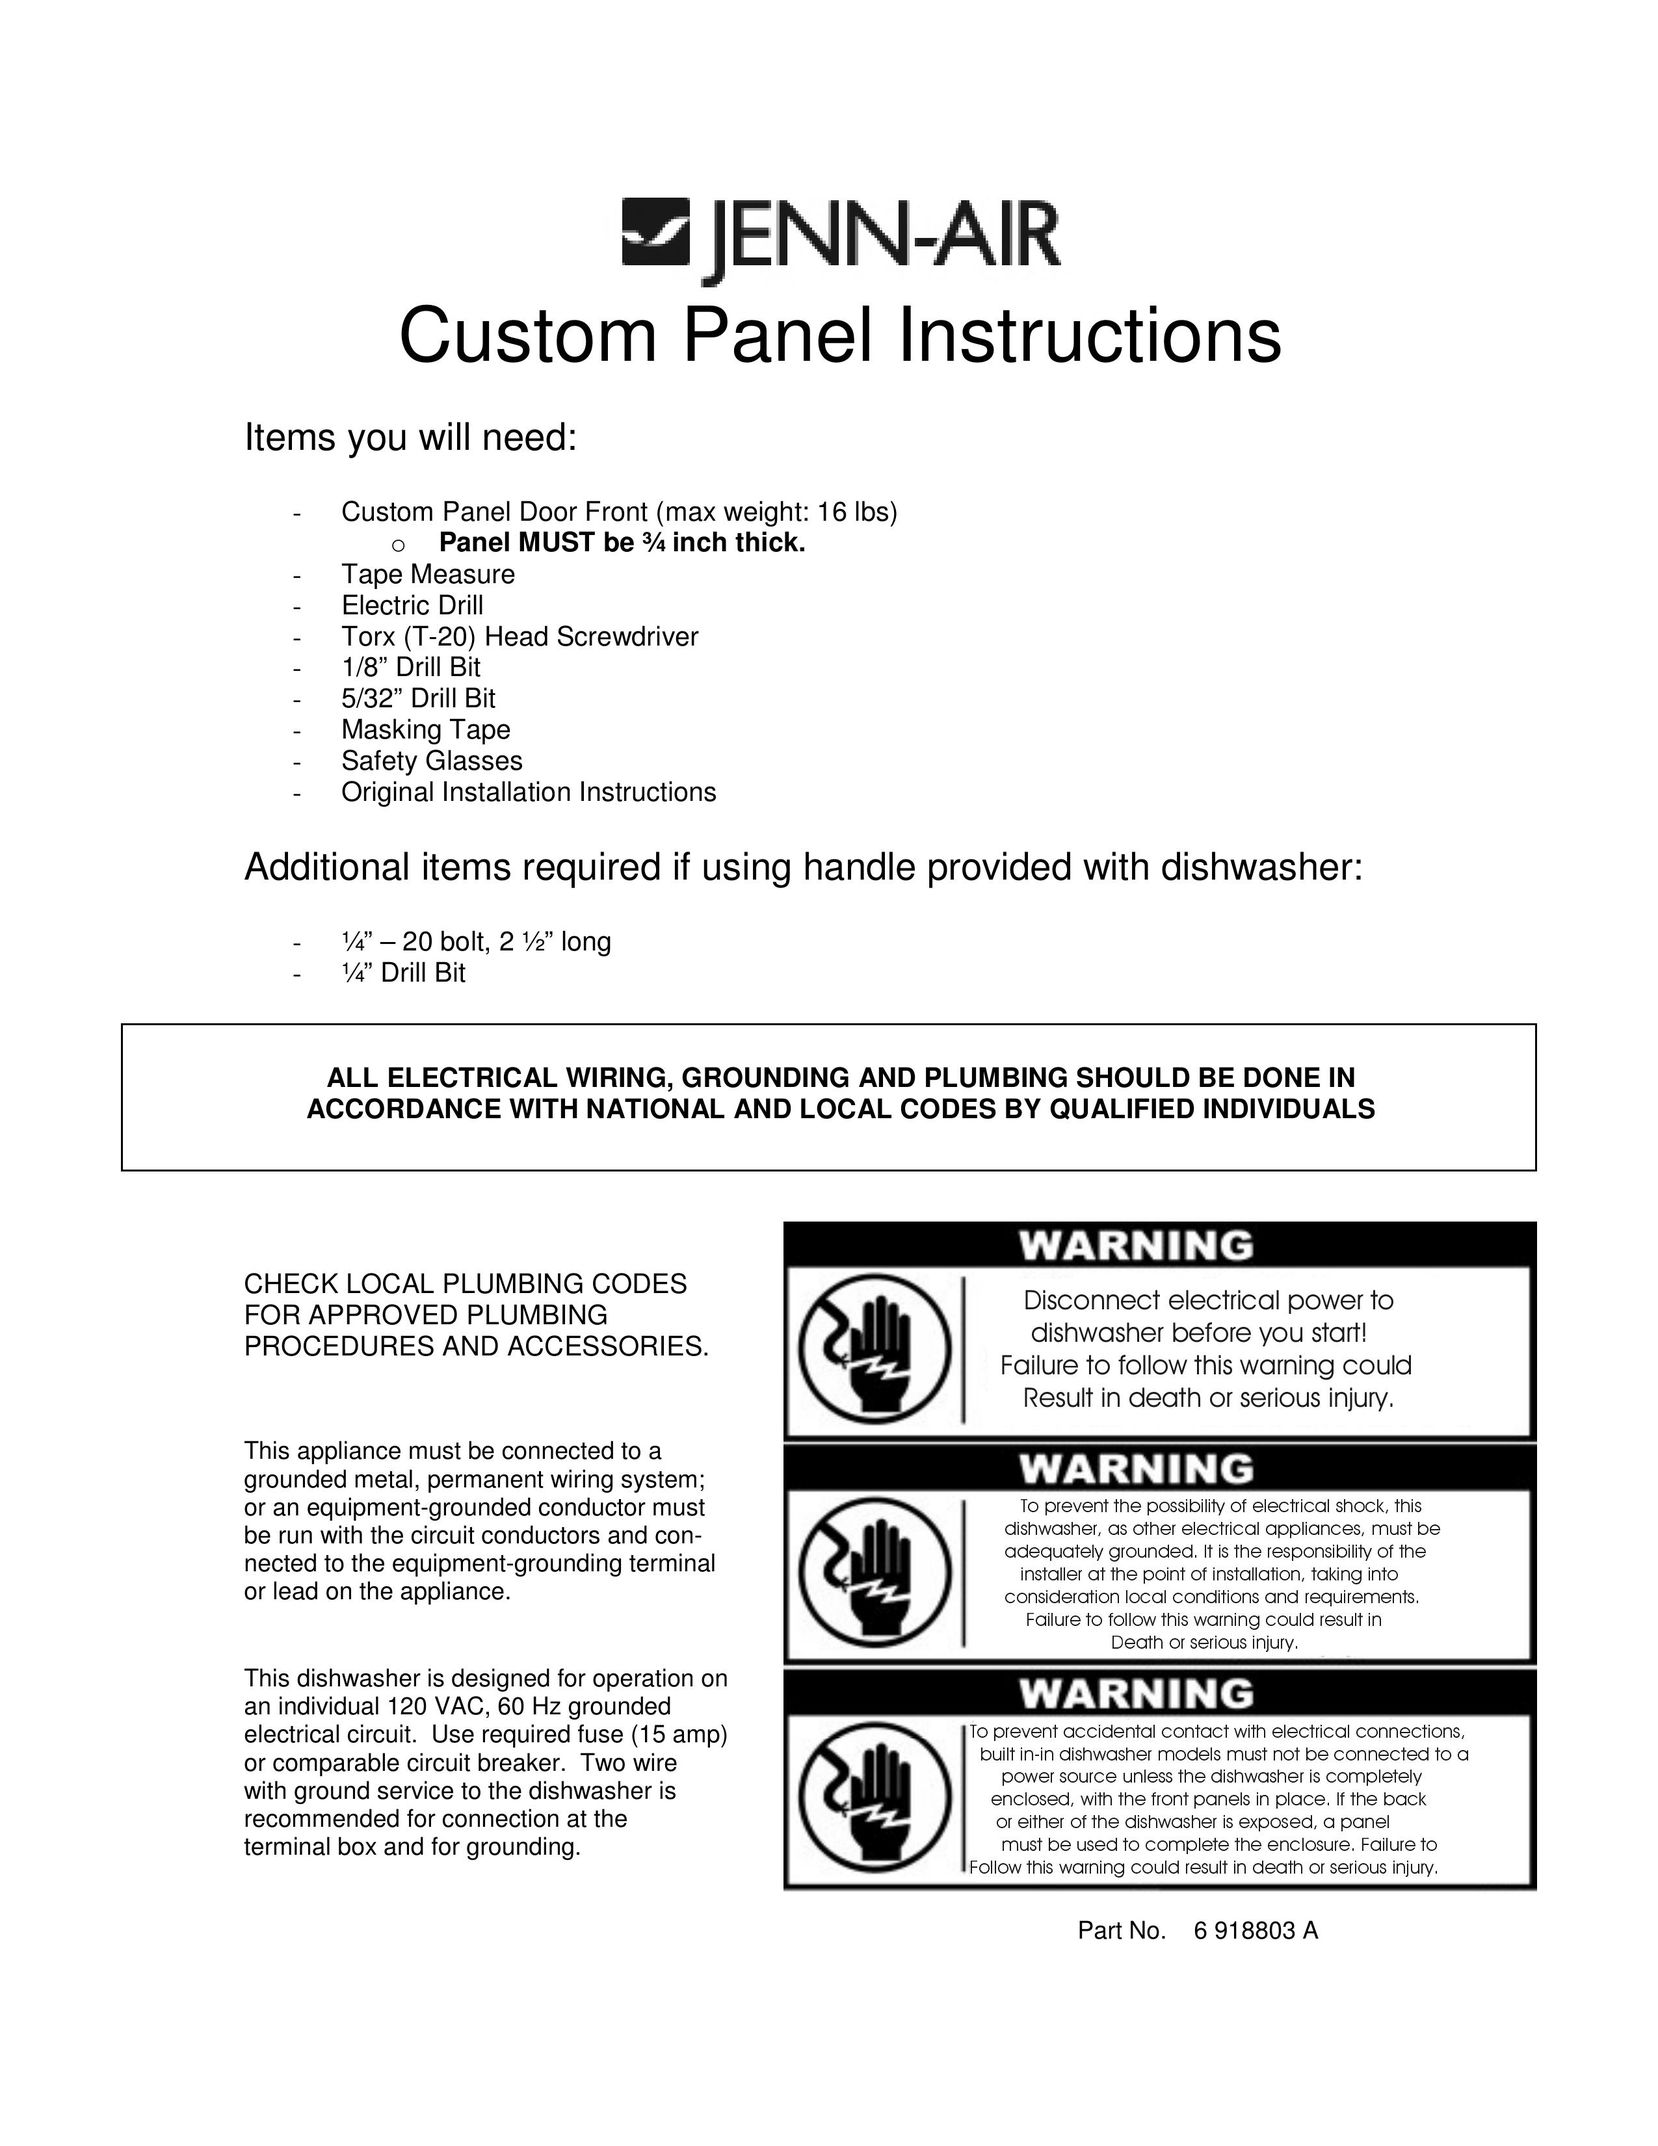 Jenn-Air 6 918803 A Dishwasher User Manual